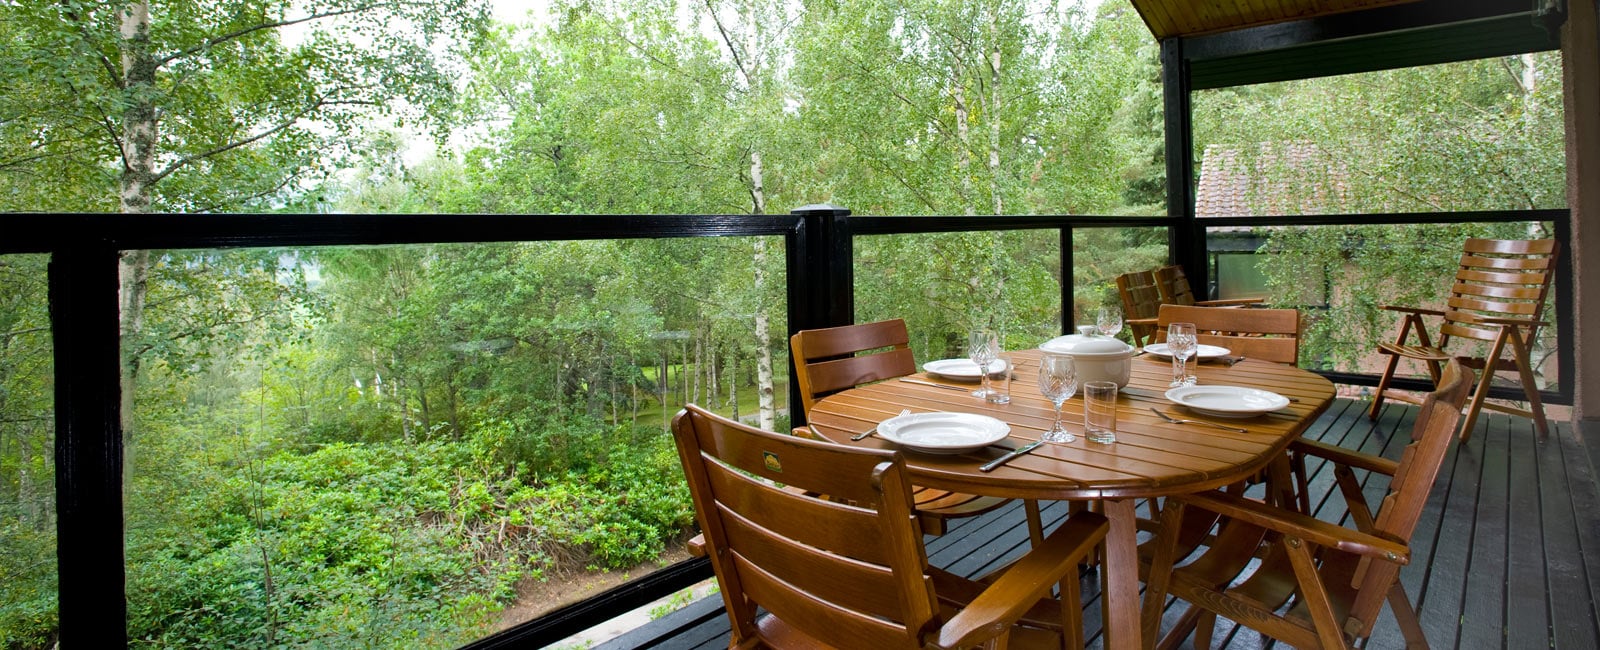 Terrace at Hilton Grand Vacations Club at Craigendarroch Lodges in Royal Deeside, Scotland